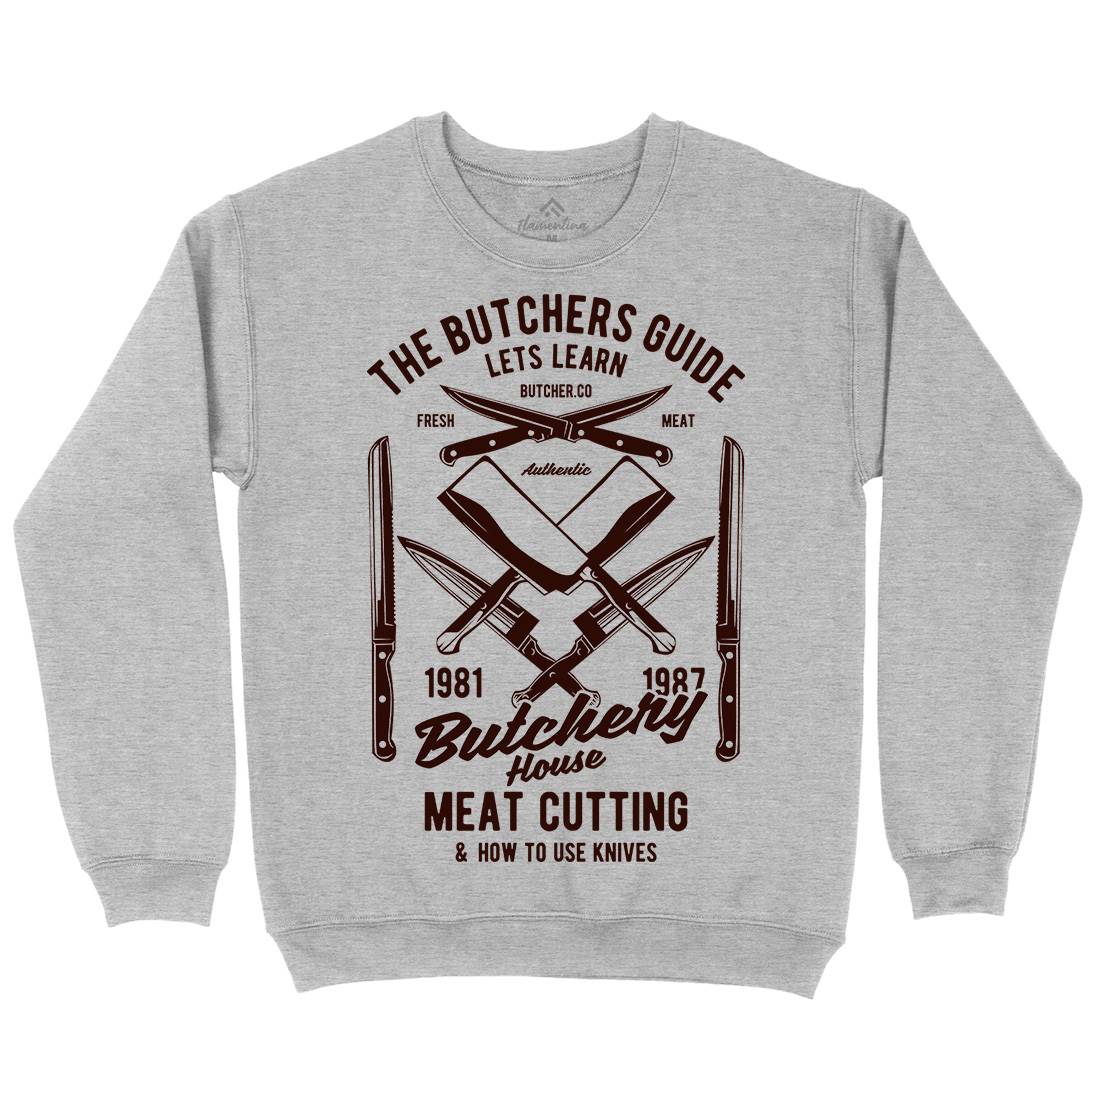 Butchery House Kids Crew Neck Sweatshirt Retro B190